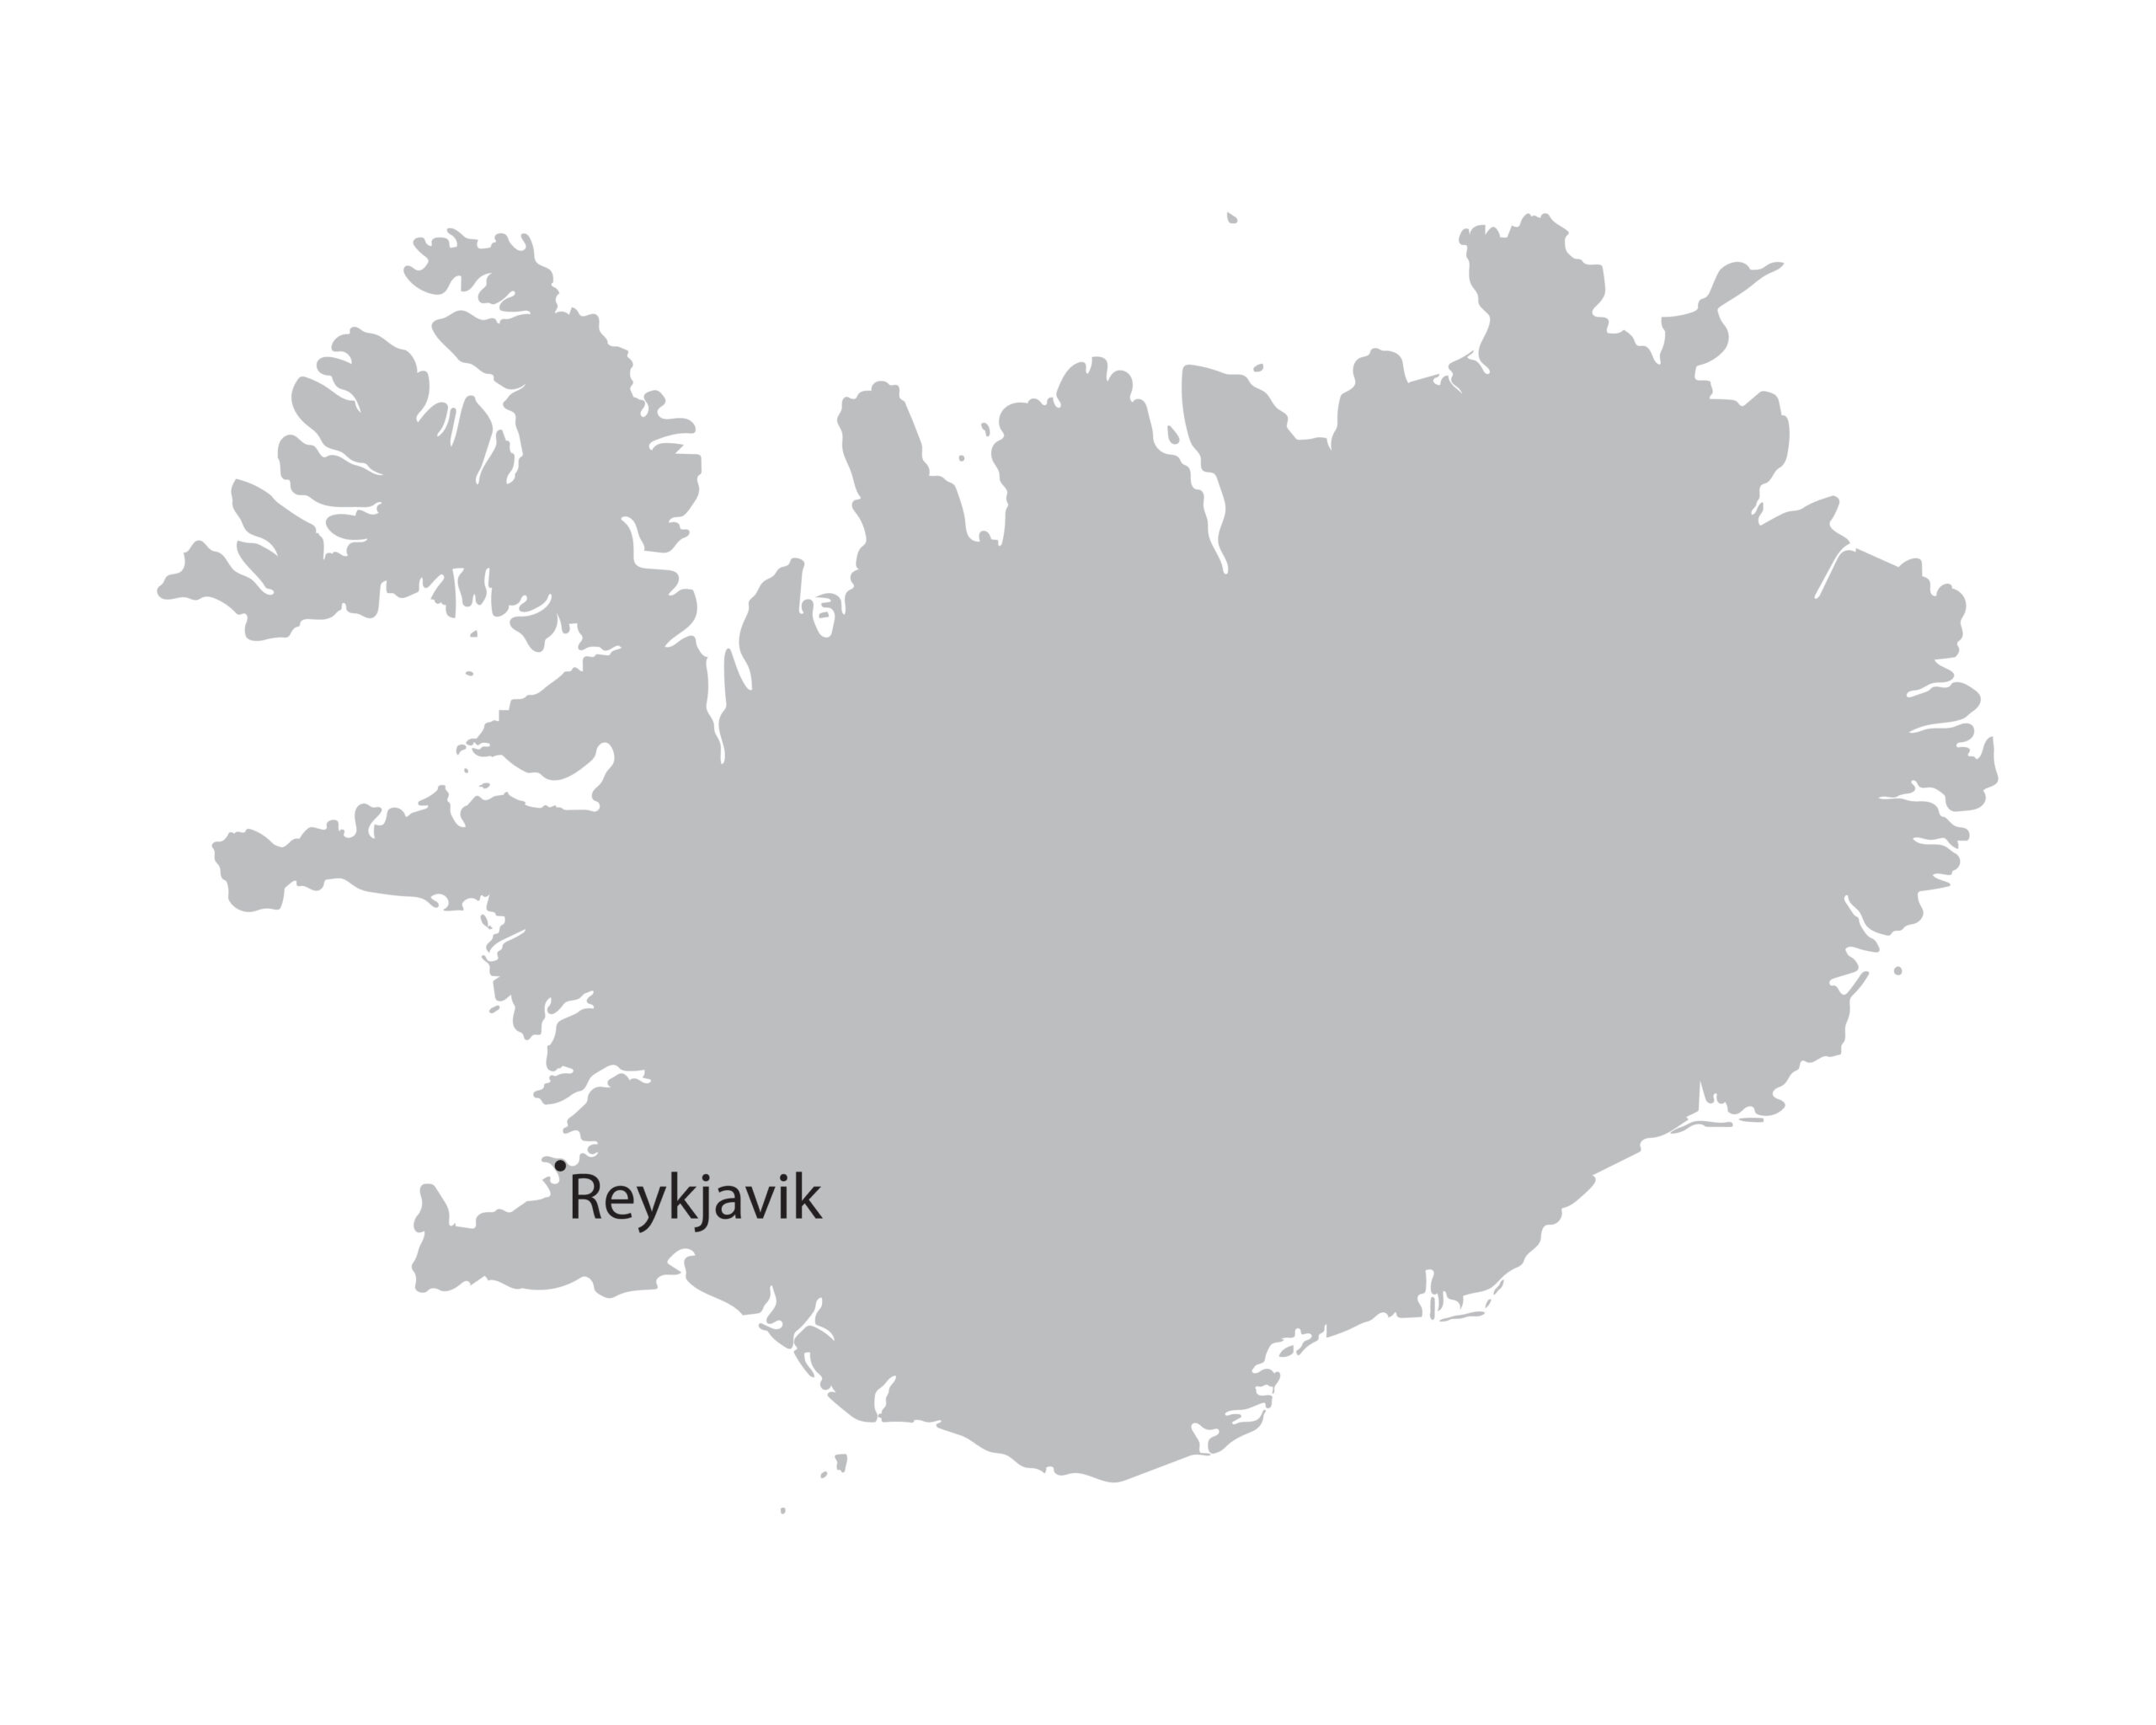 grey map of Iceland with indication of Reykjavik